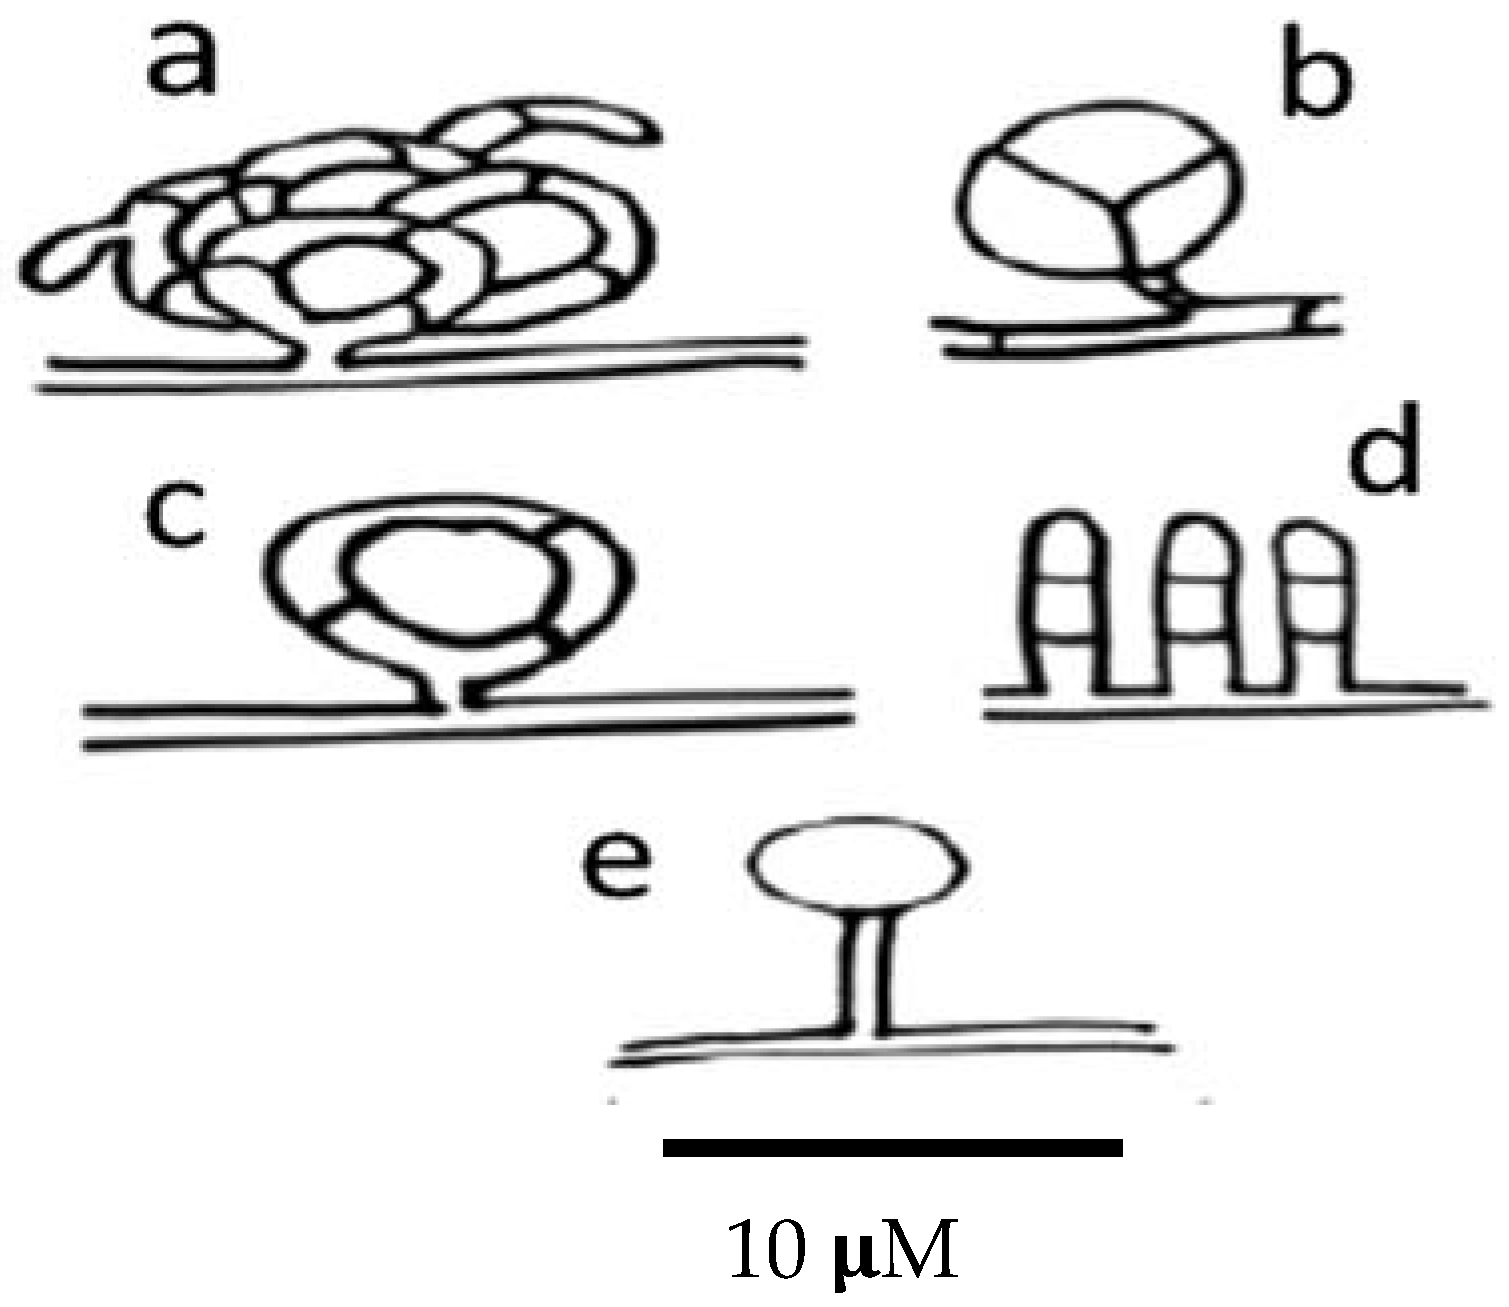 soil-inhabiting nematodes - Phylum Nematoda